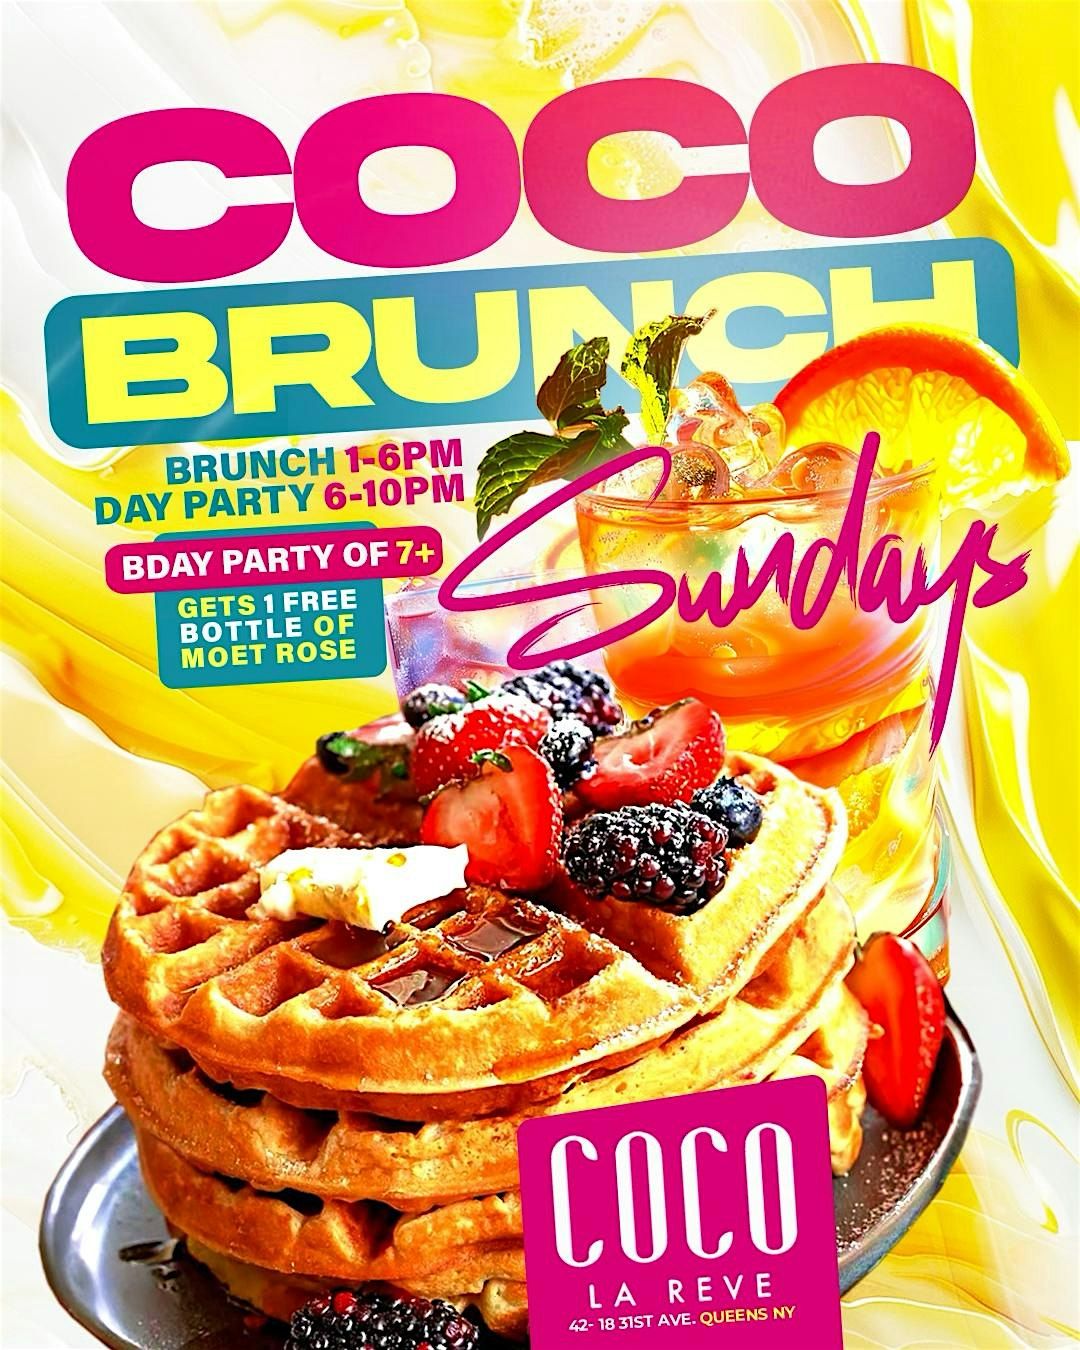 Coco Brunch Sundays at Coco la Reve